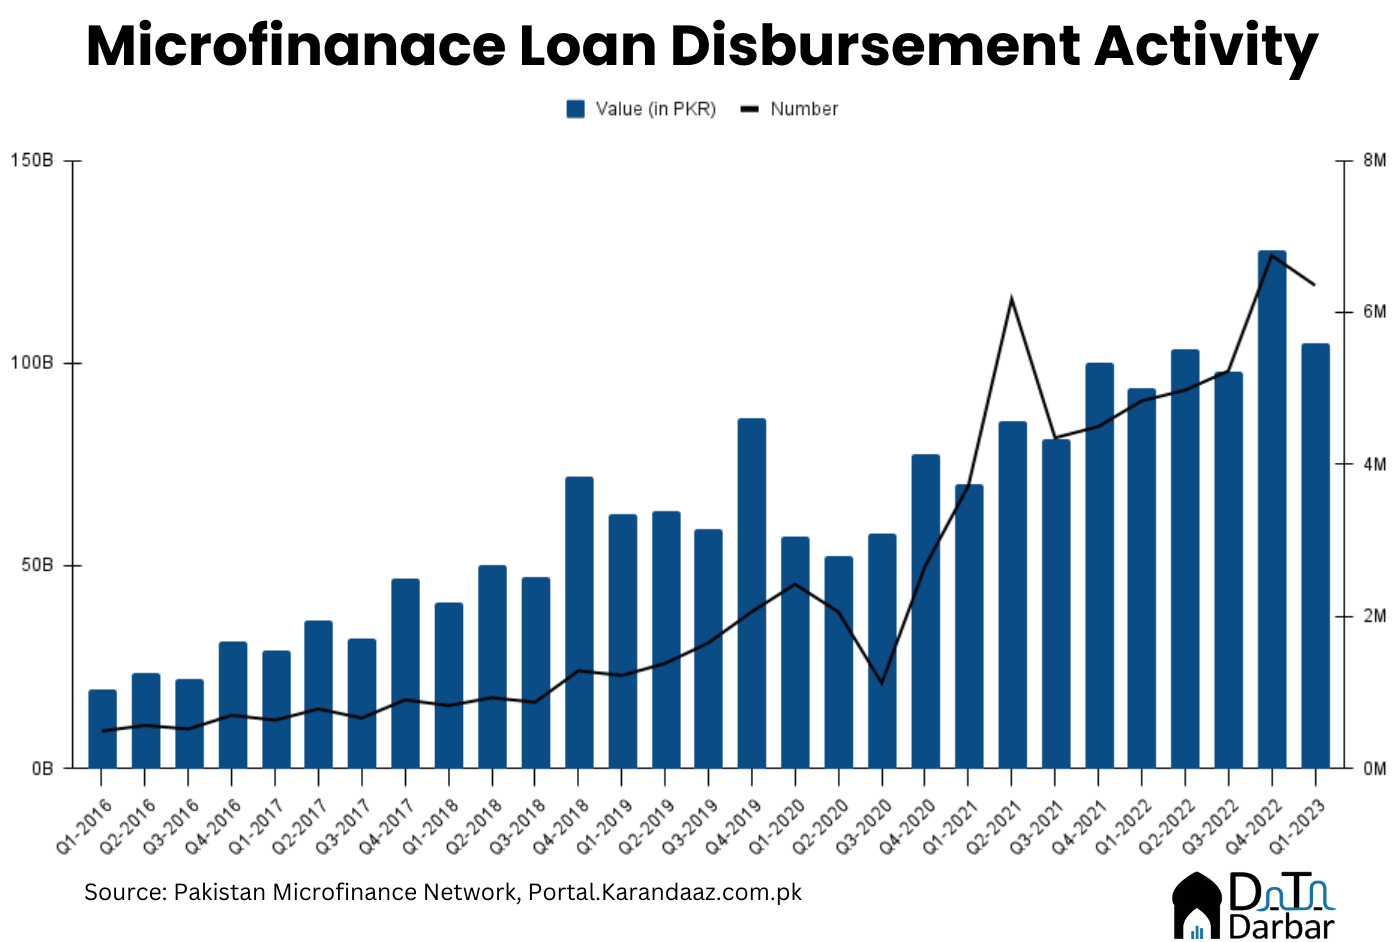 Quarterly Microfinance Loan Disbursements